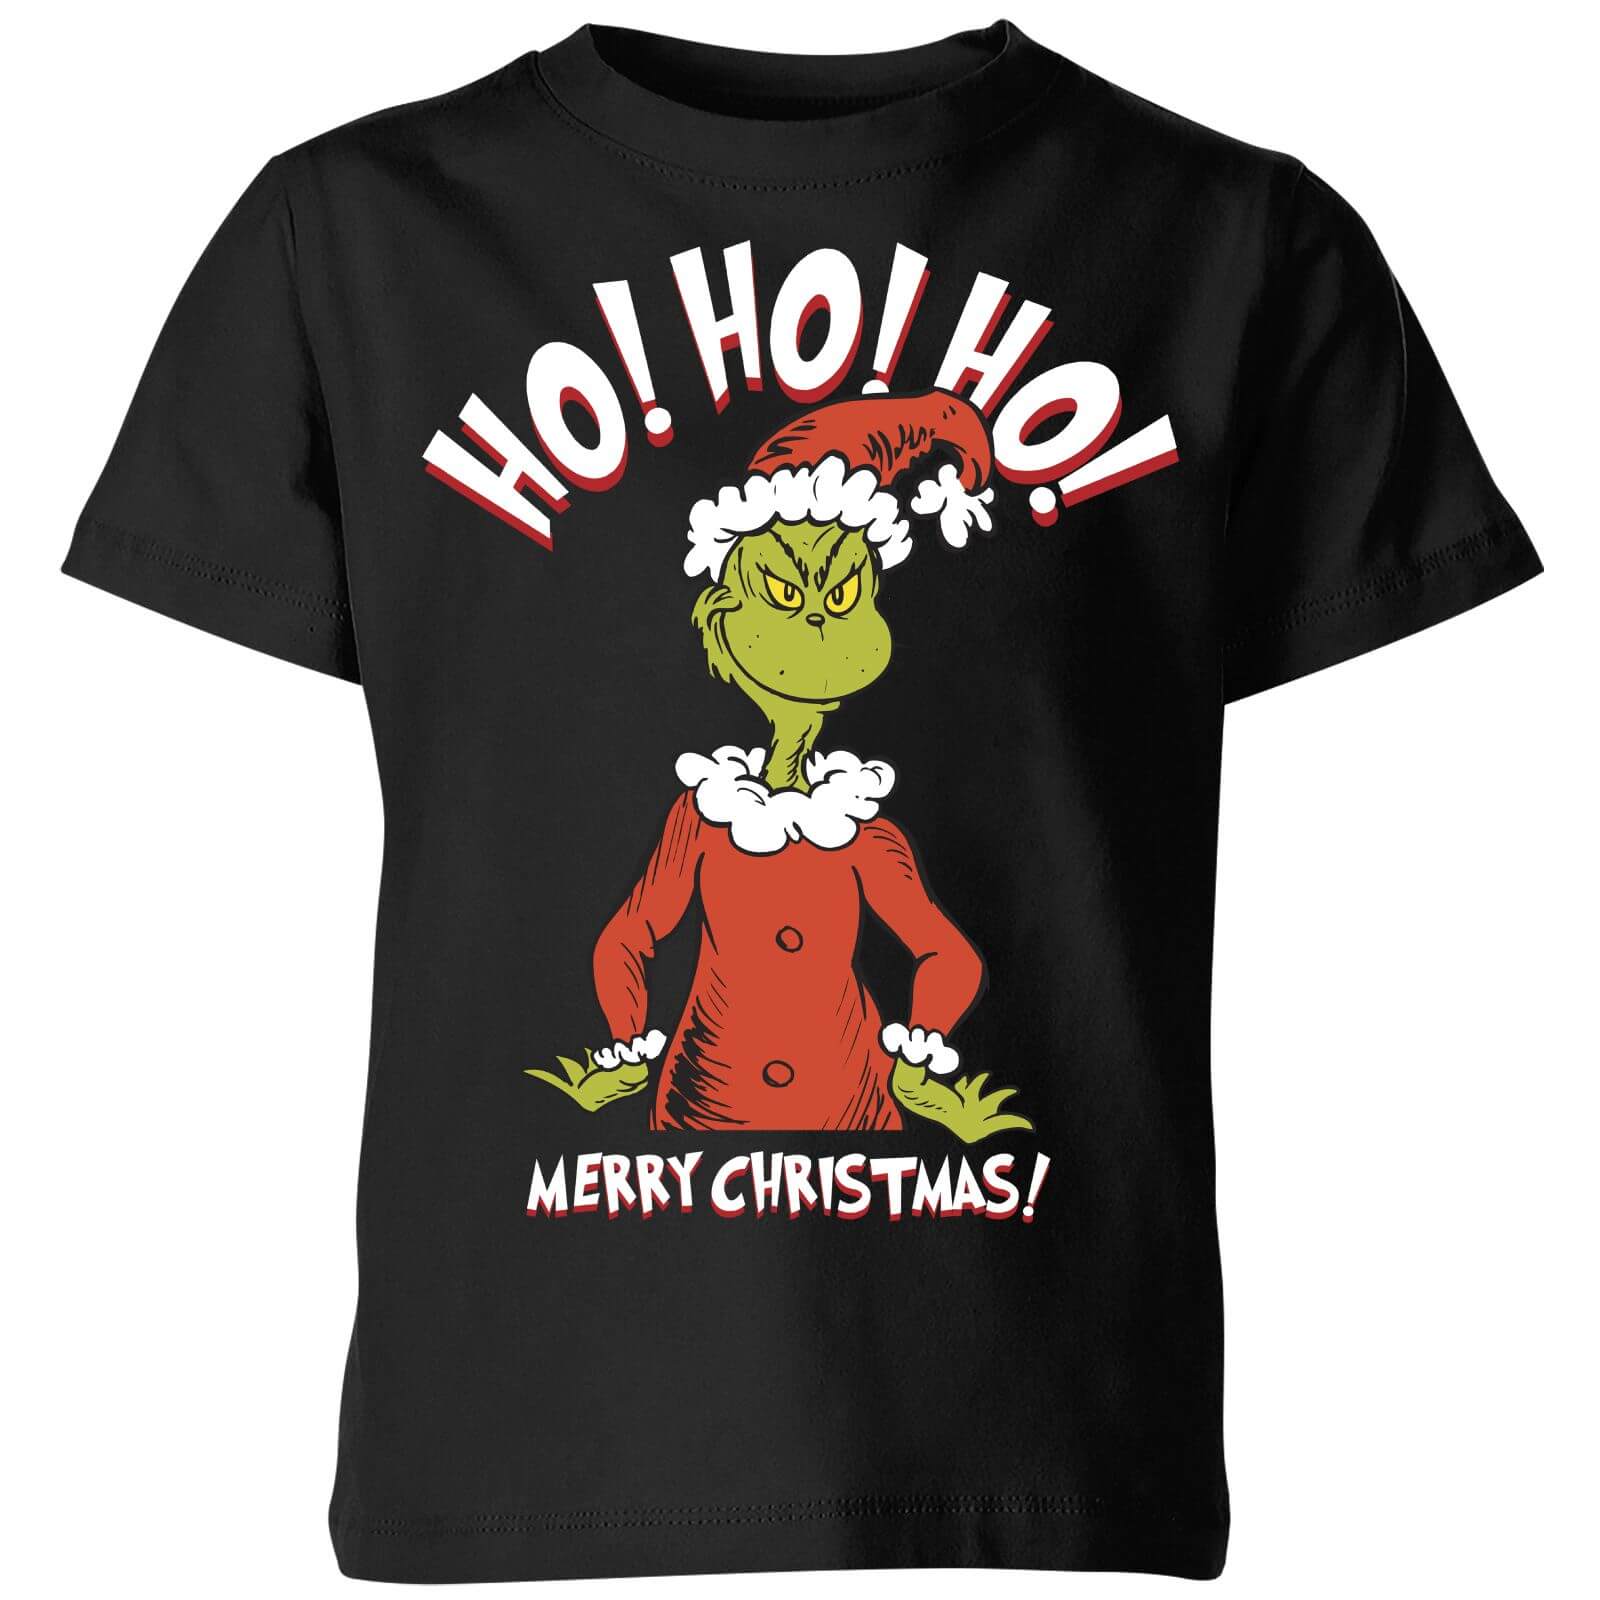 The Grinch Ho Ho Ho Smile Kids Christmas T-Shirt - Black - 9-10 Years